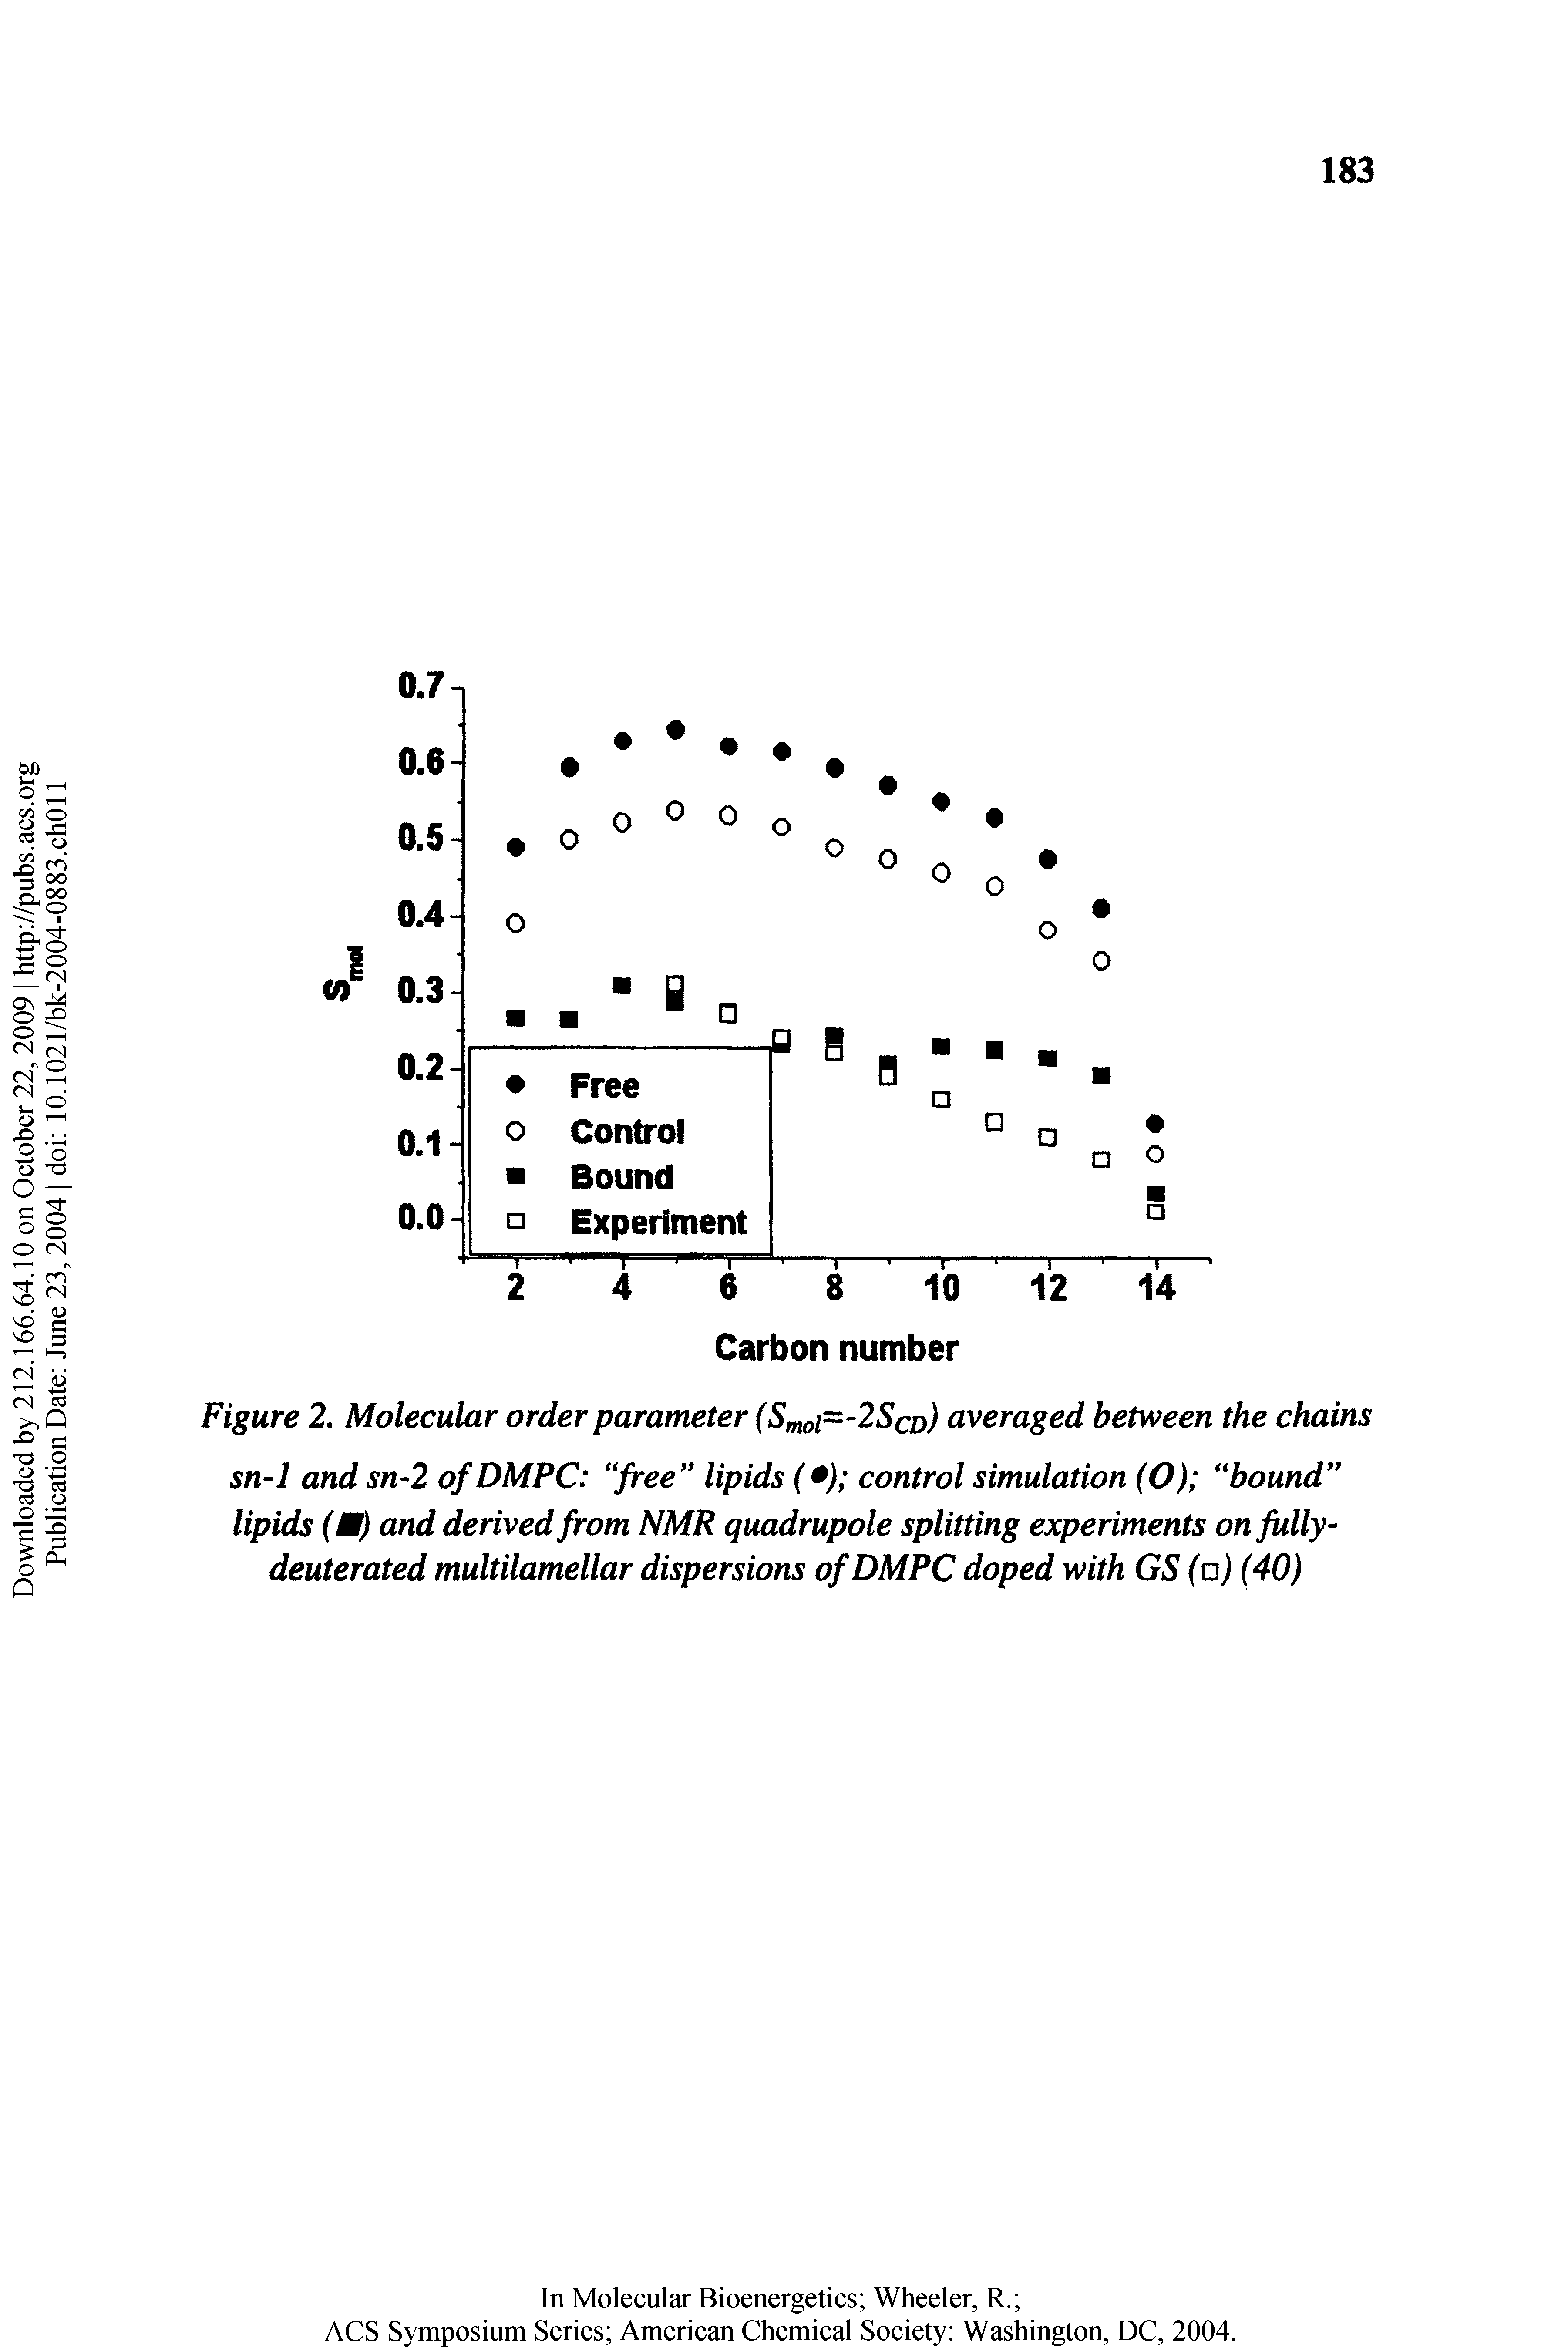 Figure 2. Molecular order parameter (Smoi- Sco) averaged between the chains...